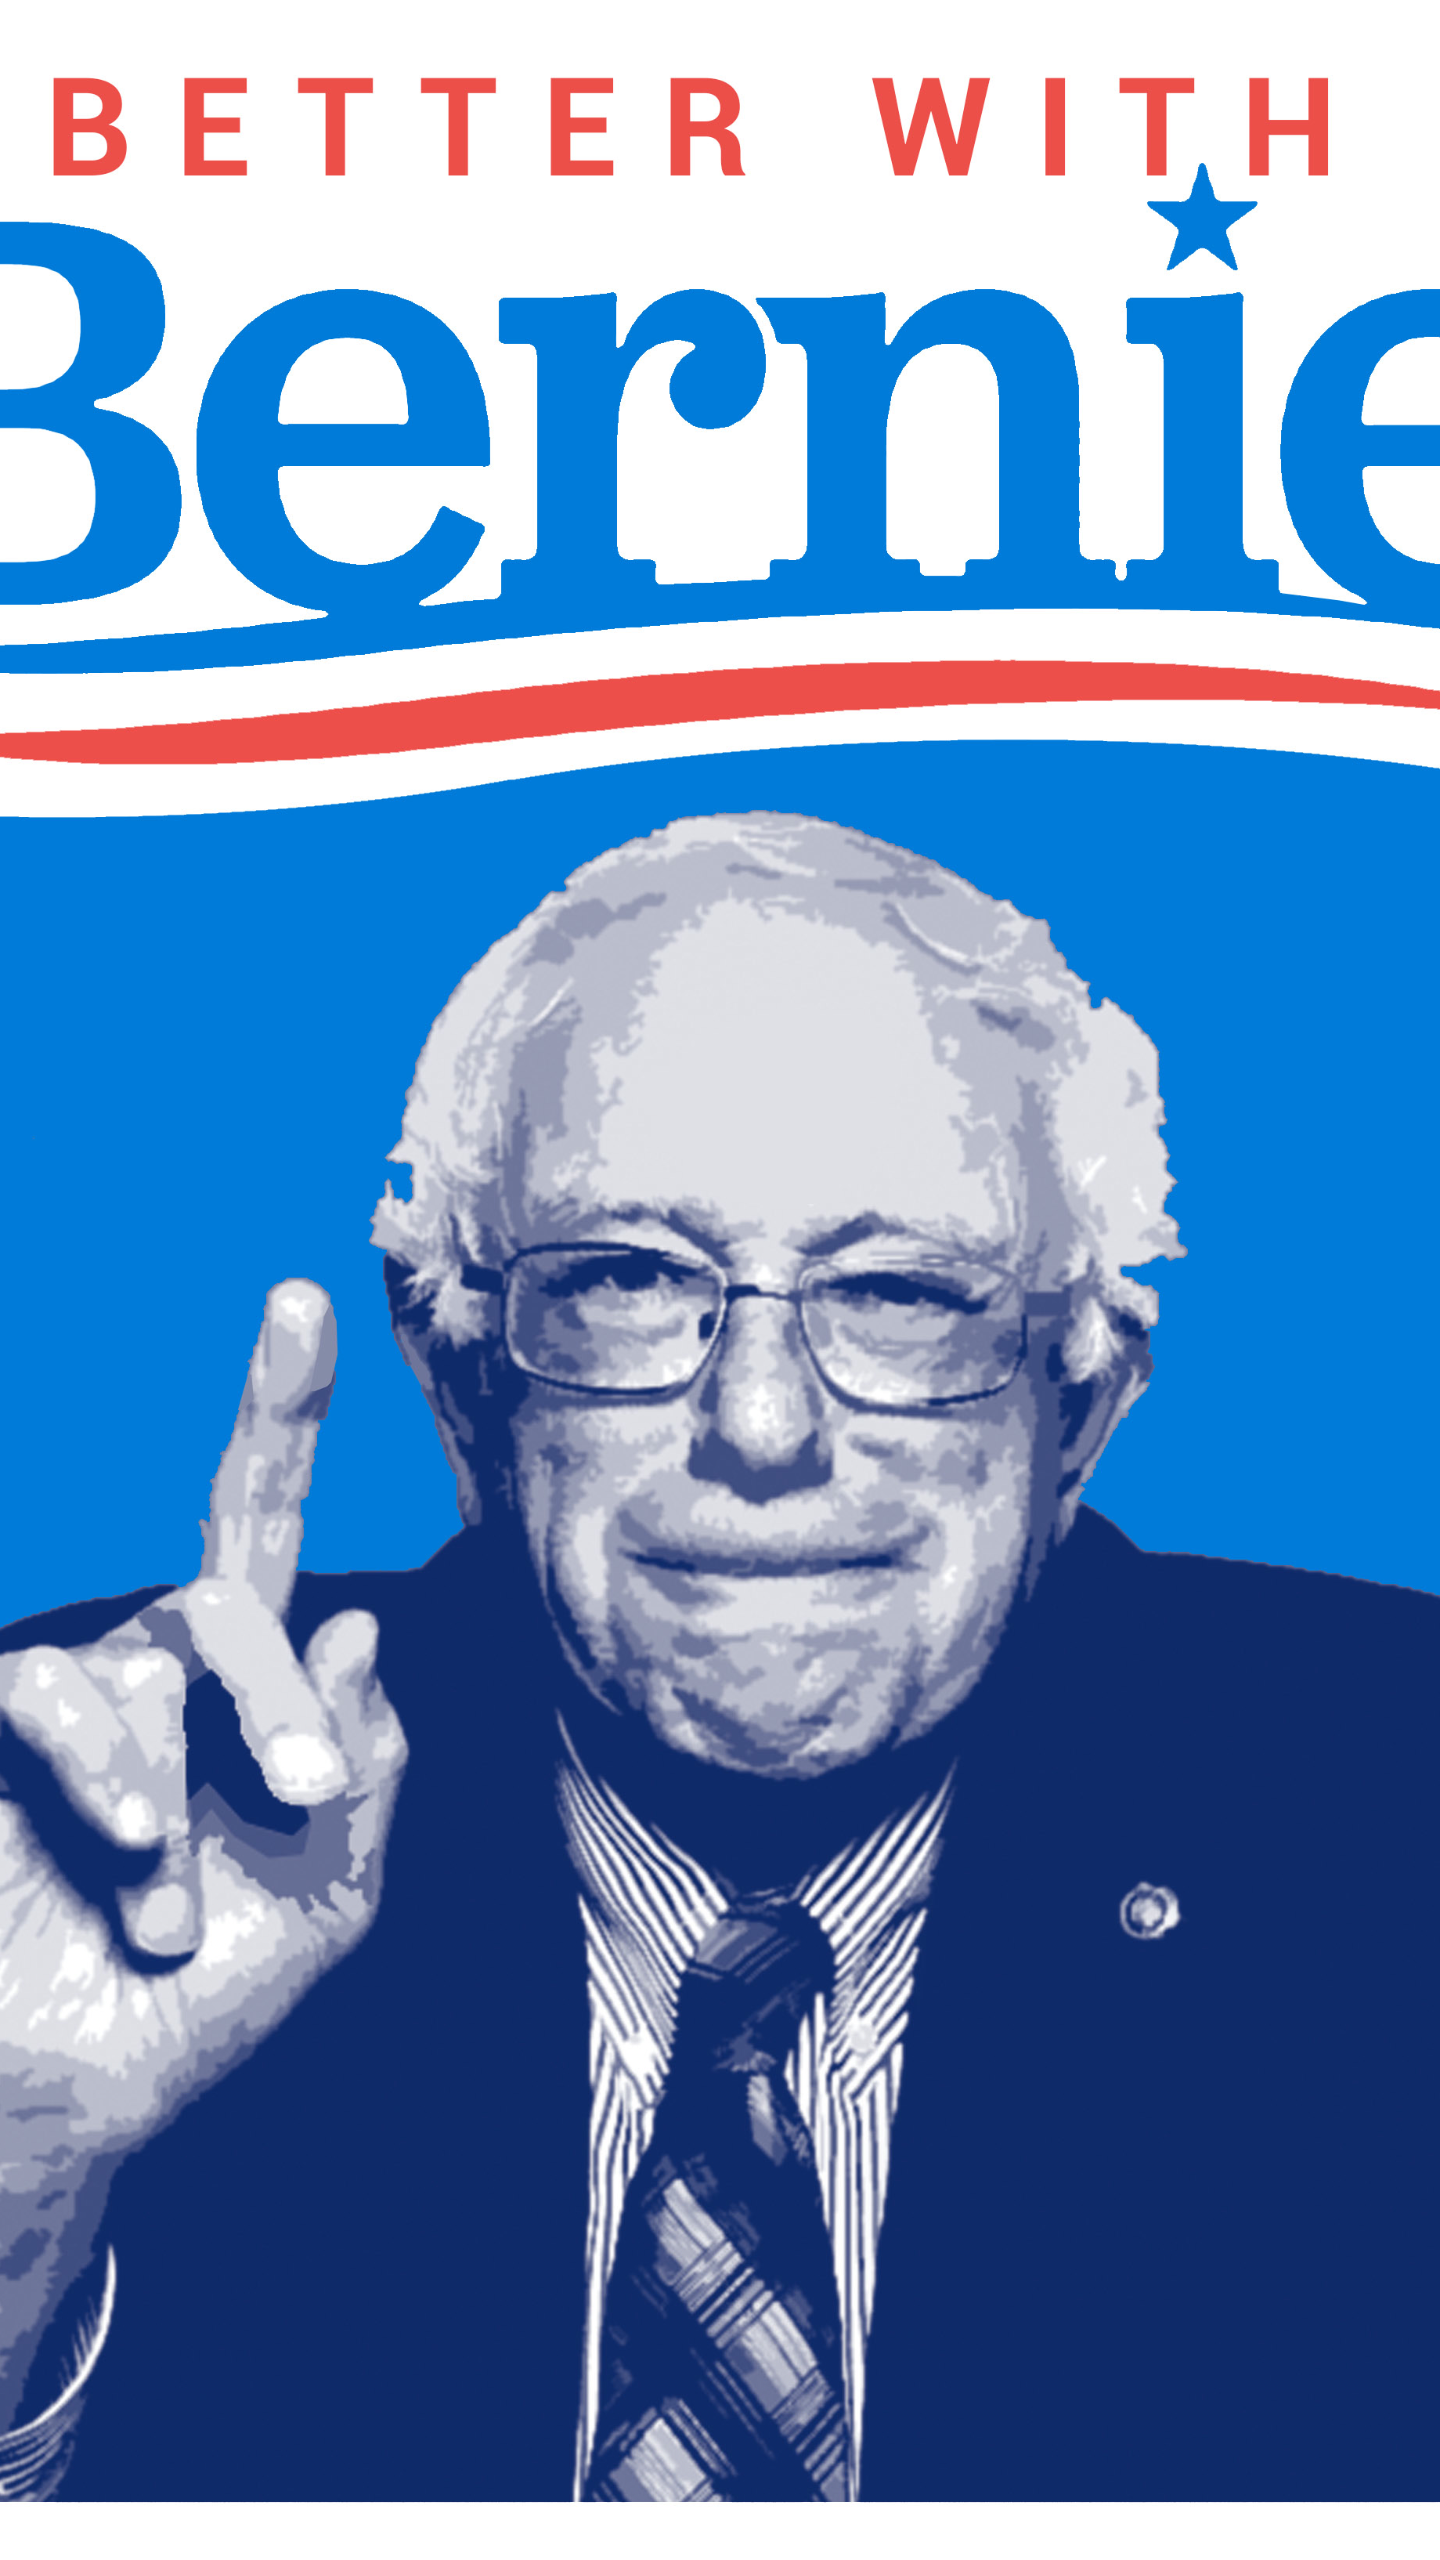 Bernie Wallpaper. Bernie Sanders